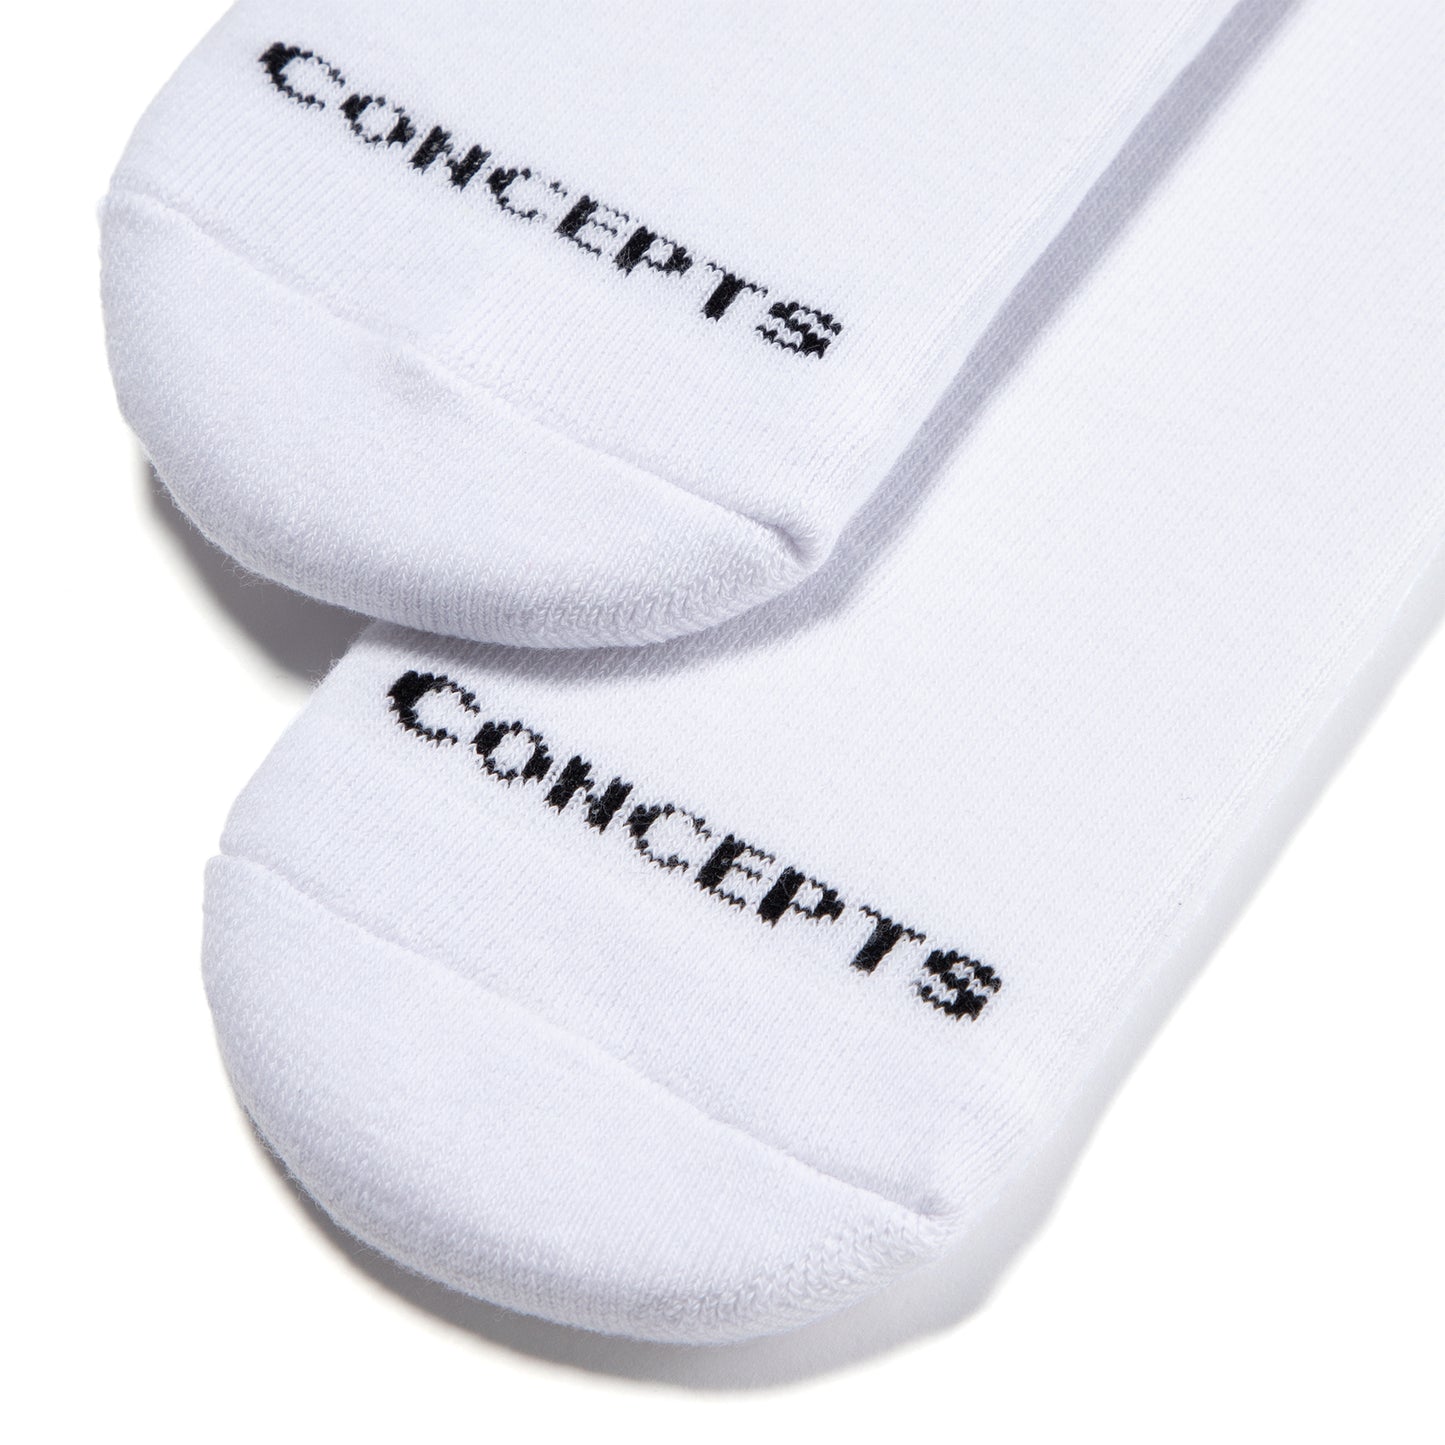 Concepts Random C Sock (White/Black/Green)